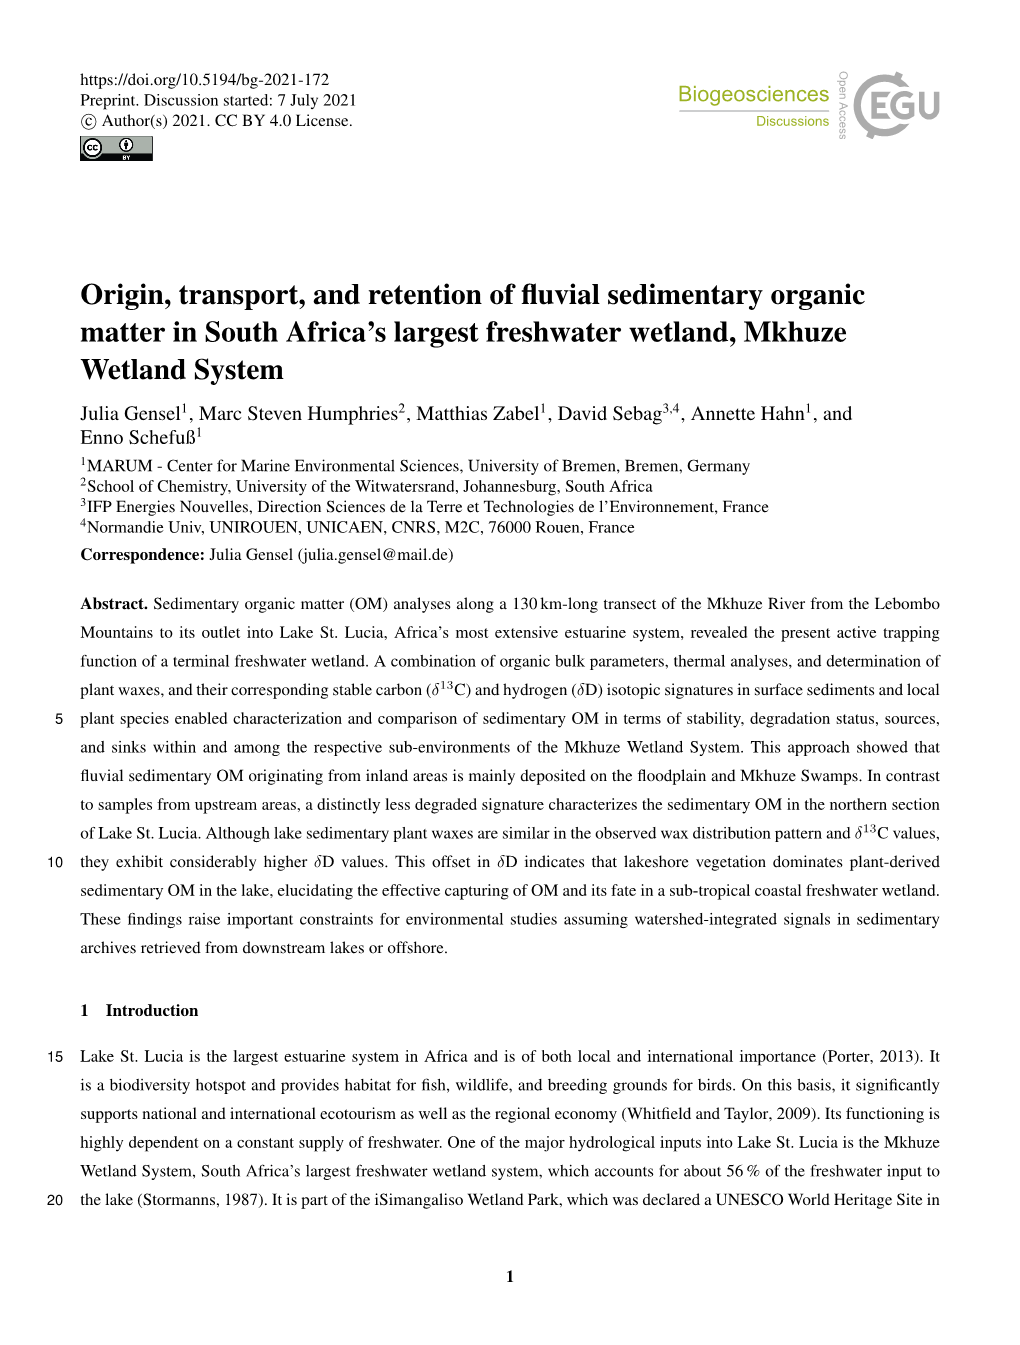 Origin, Transport, and Retention of Fluvial Sedimentary Organic Matter